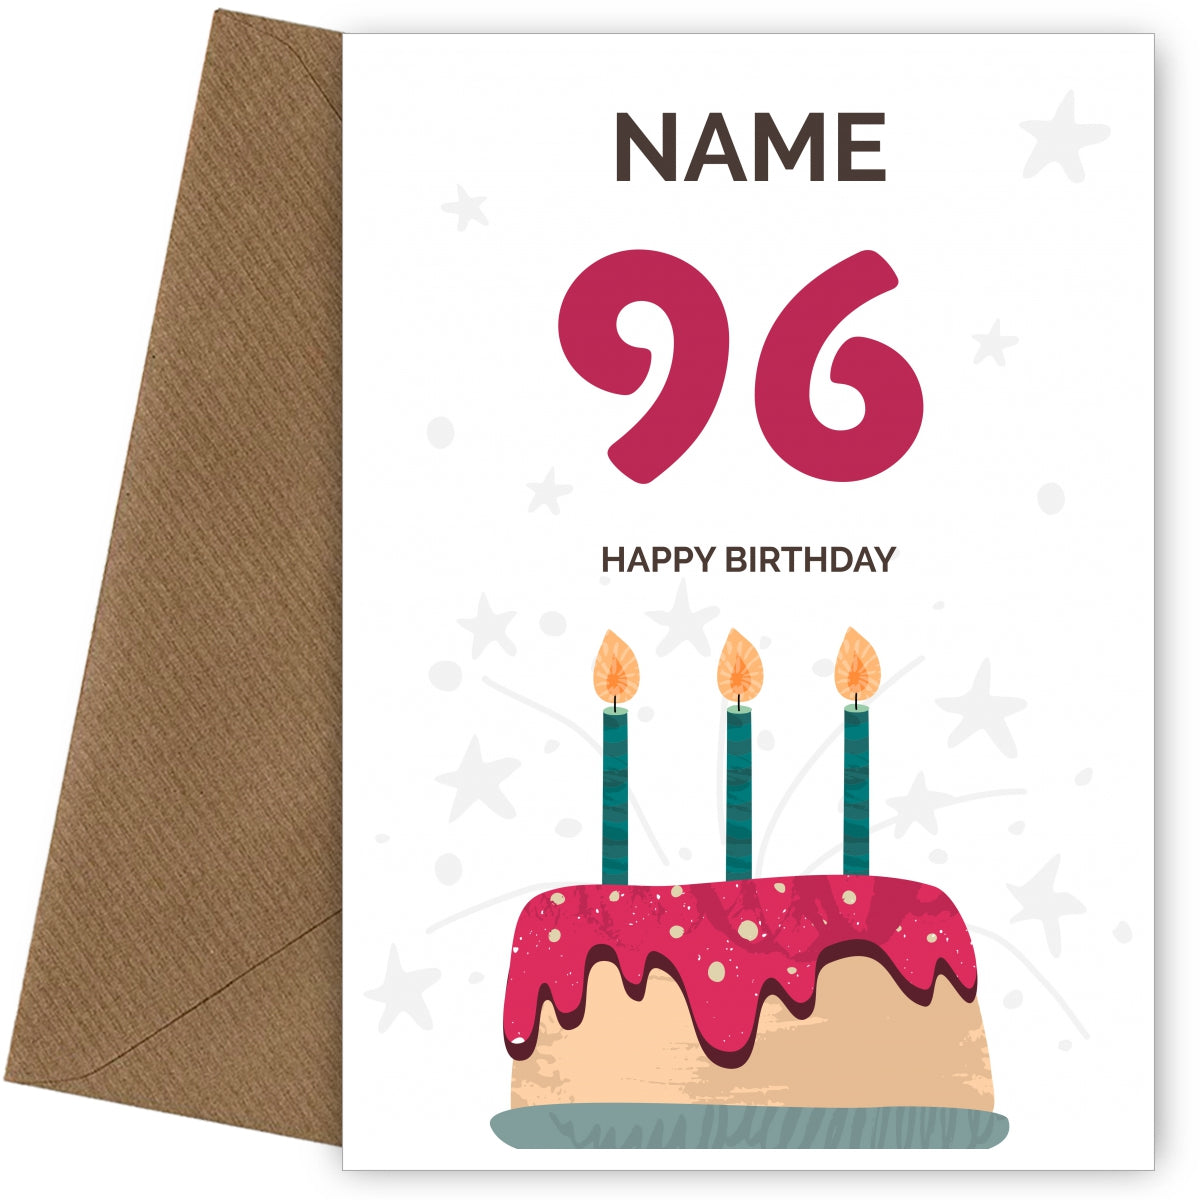 Happy 96th Birthday Card - Fun Birthday Cake Design